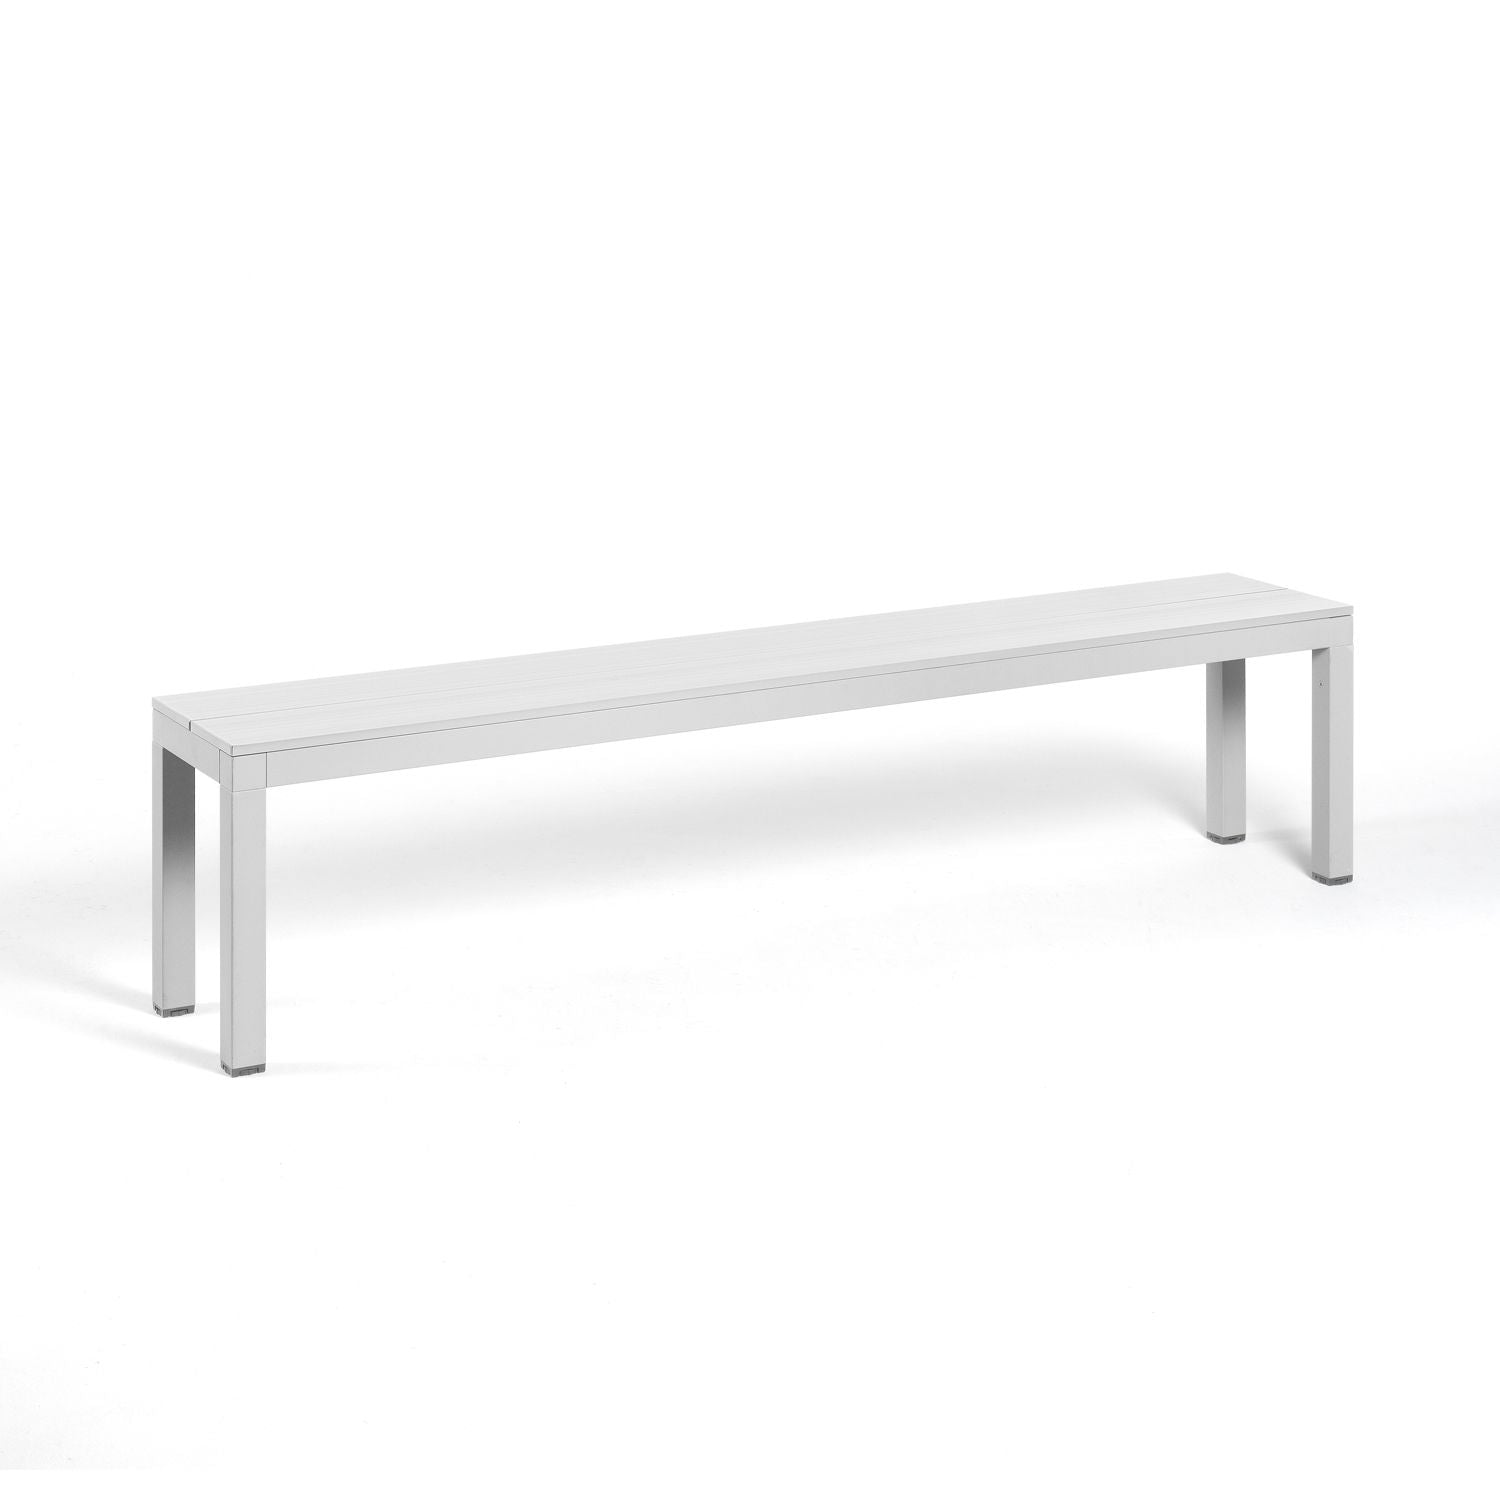 Rio Aluminium Bench By Nardi - White